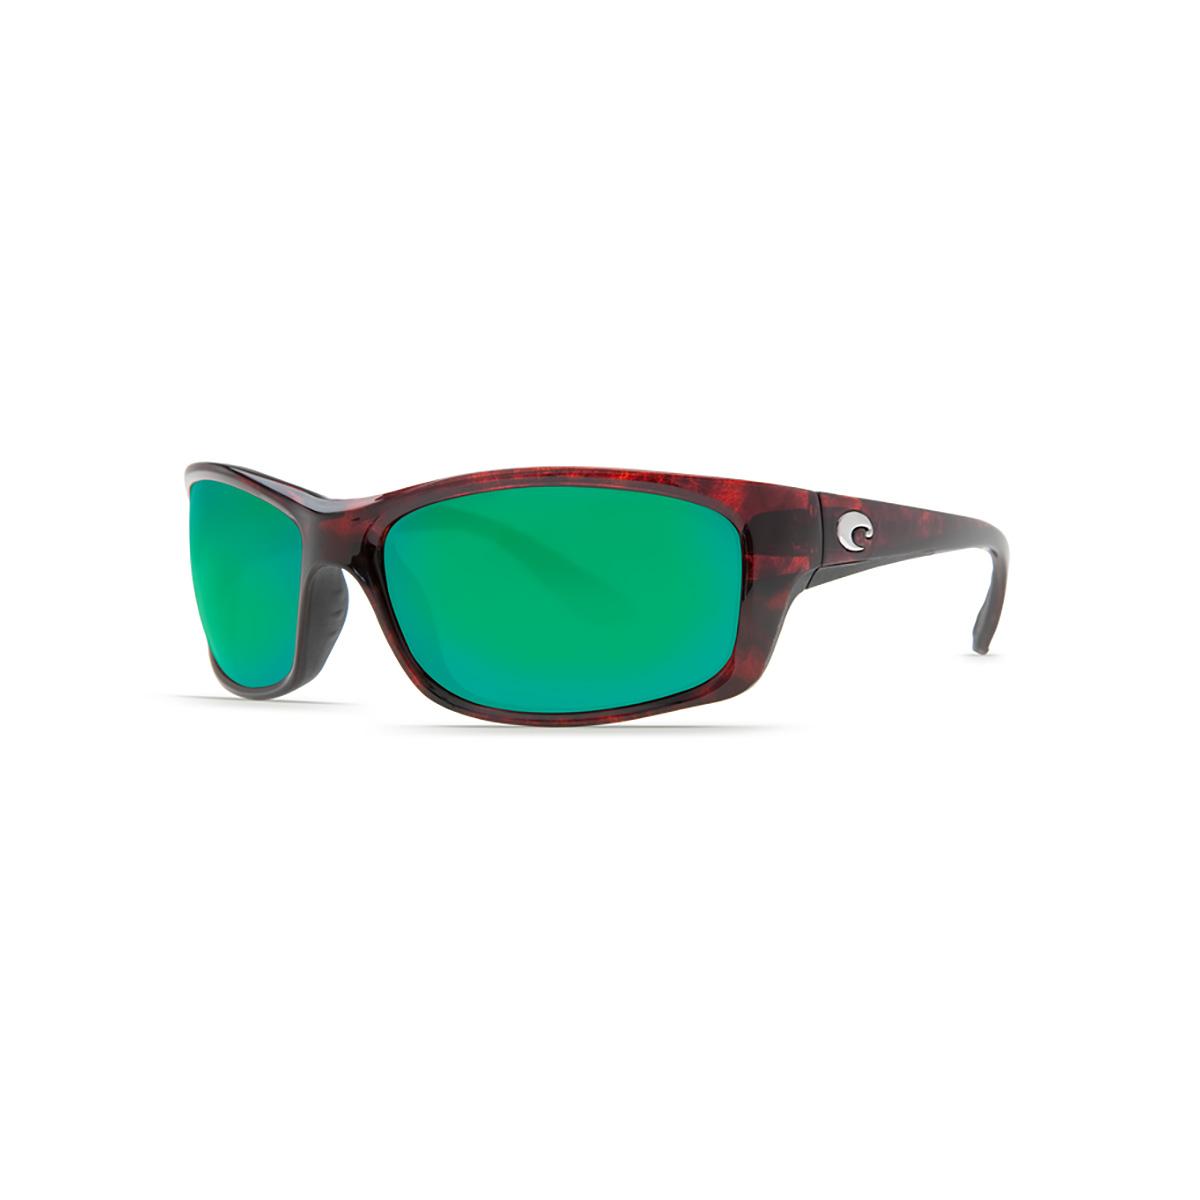  Jose 580p Sunglasses - Polarized Plastic